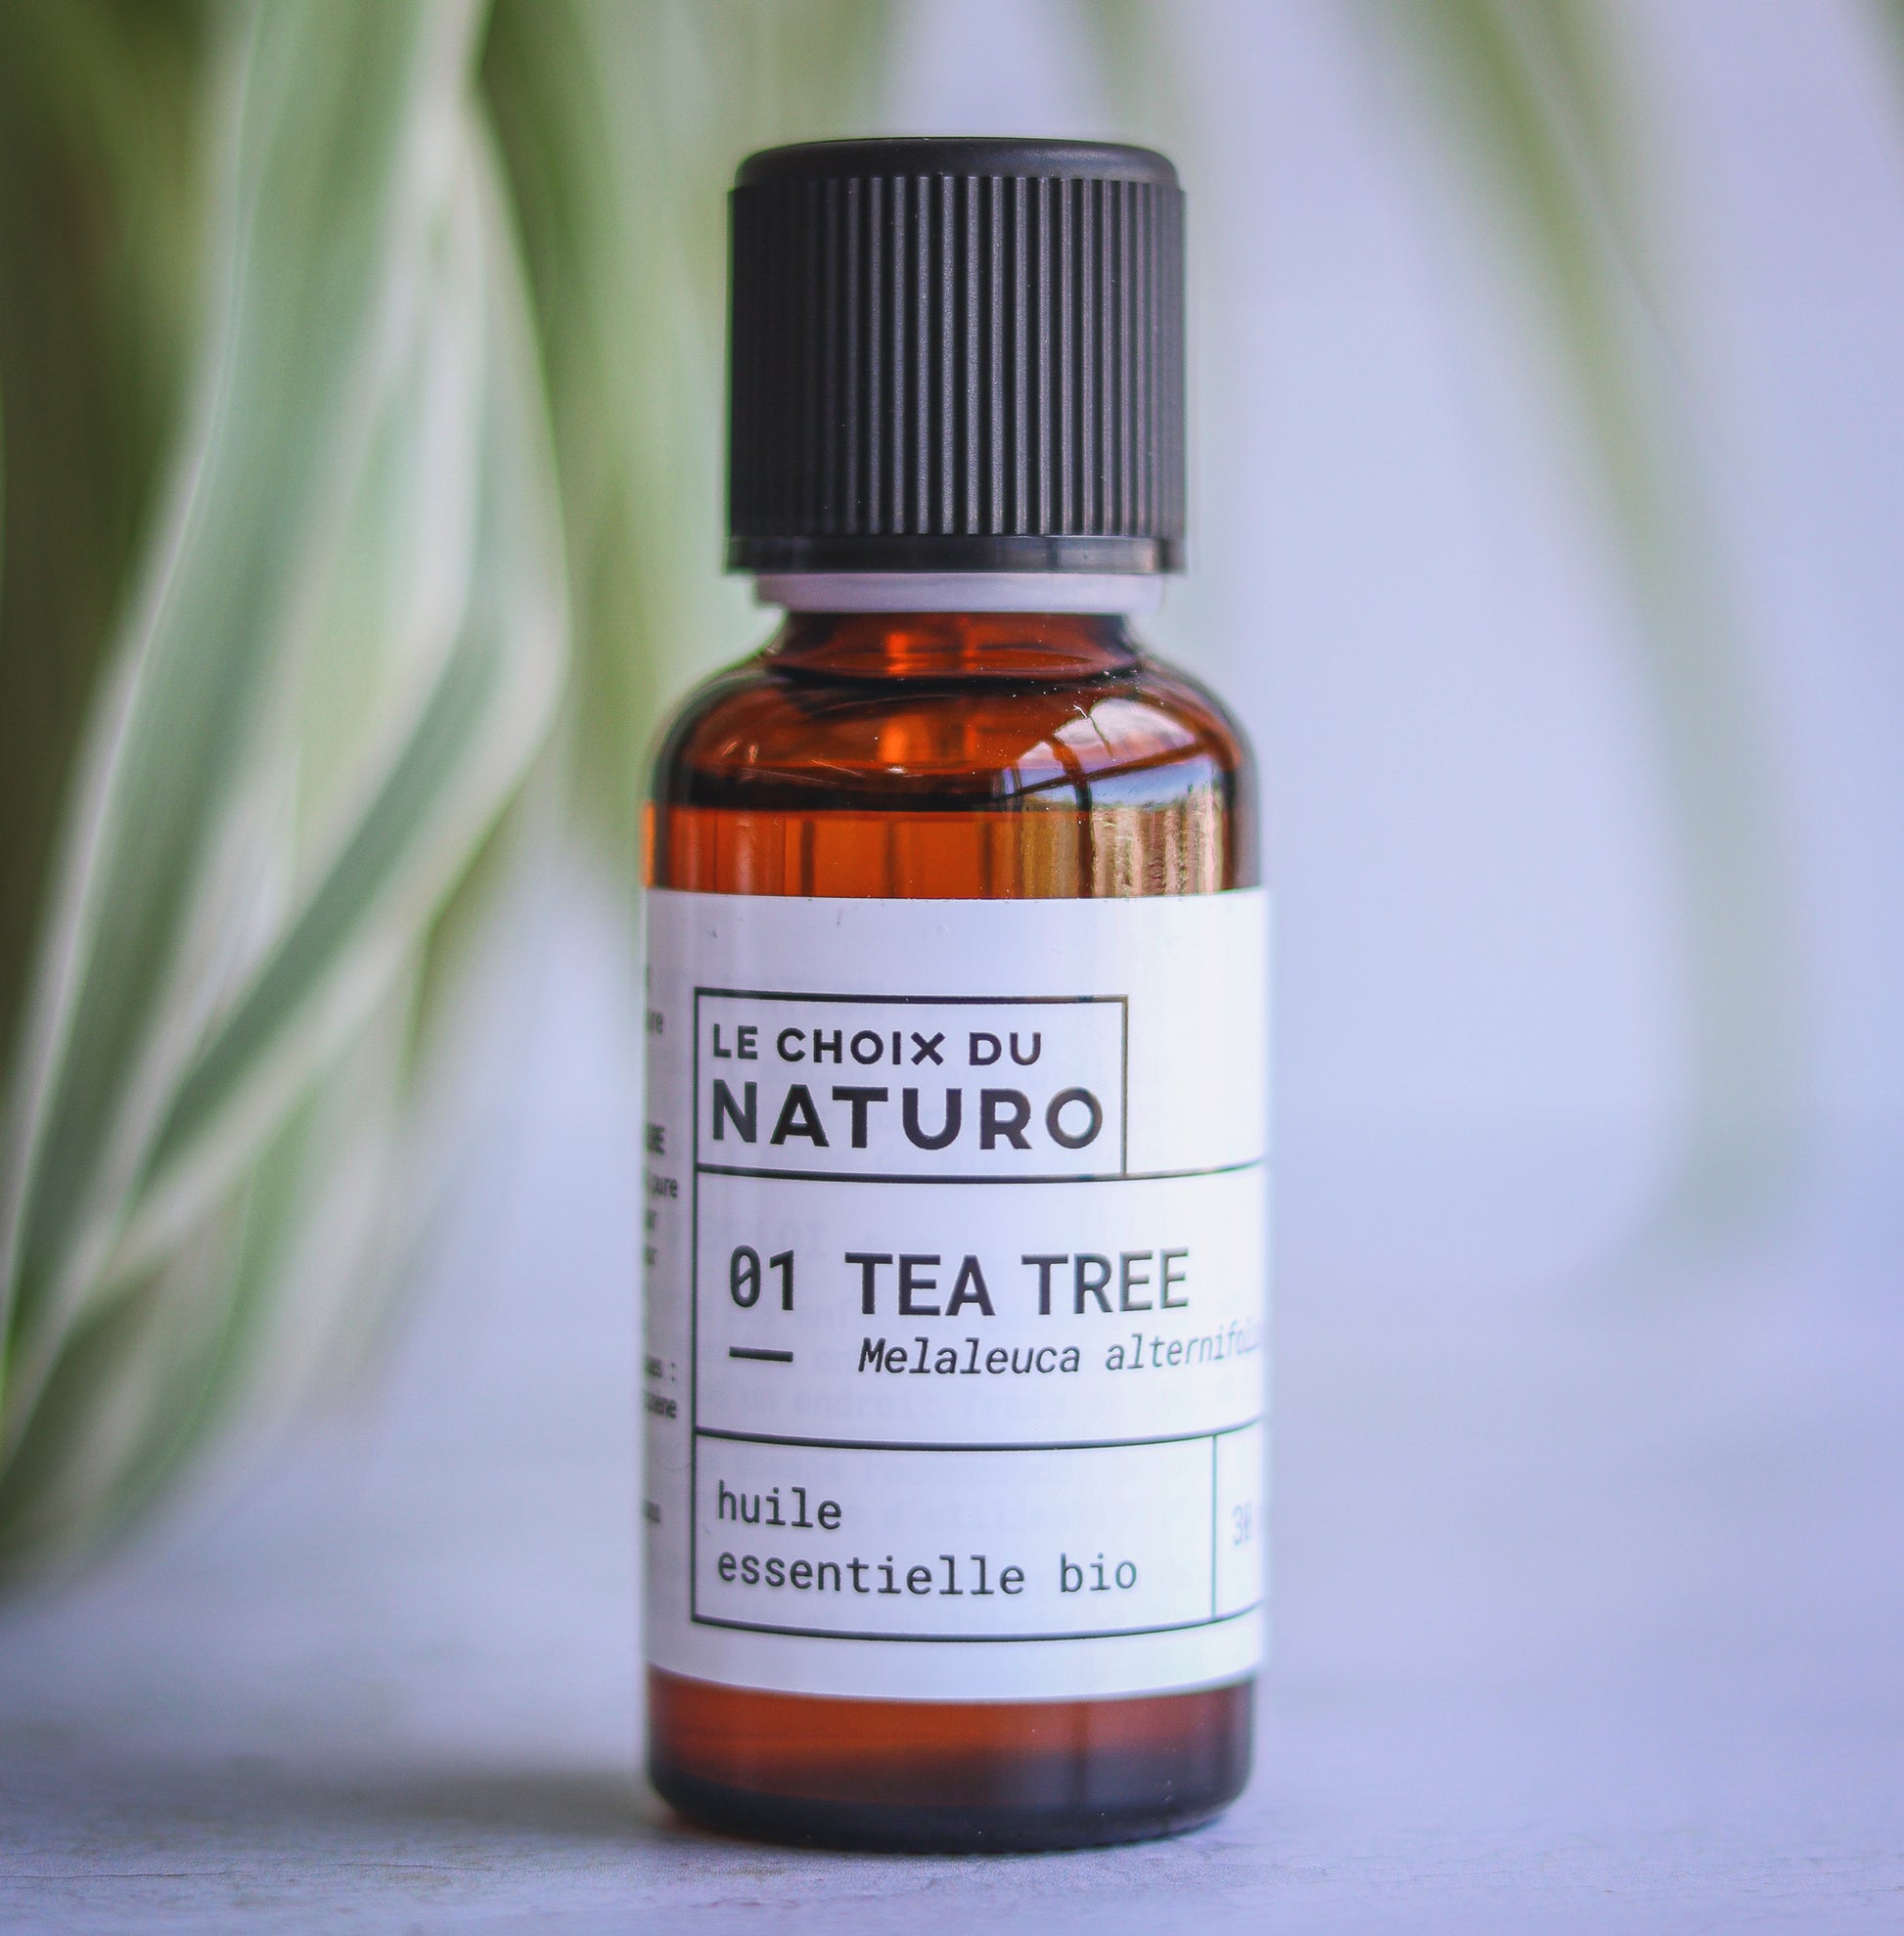 Acheter huile essentielle Tea tree Bio (Melaleuca Alternifolia) d'Australie